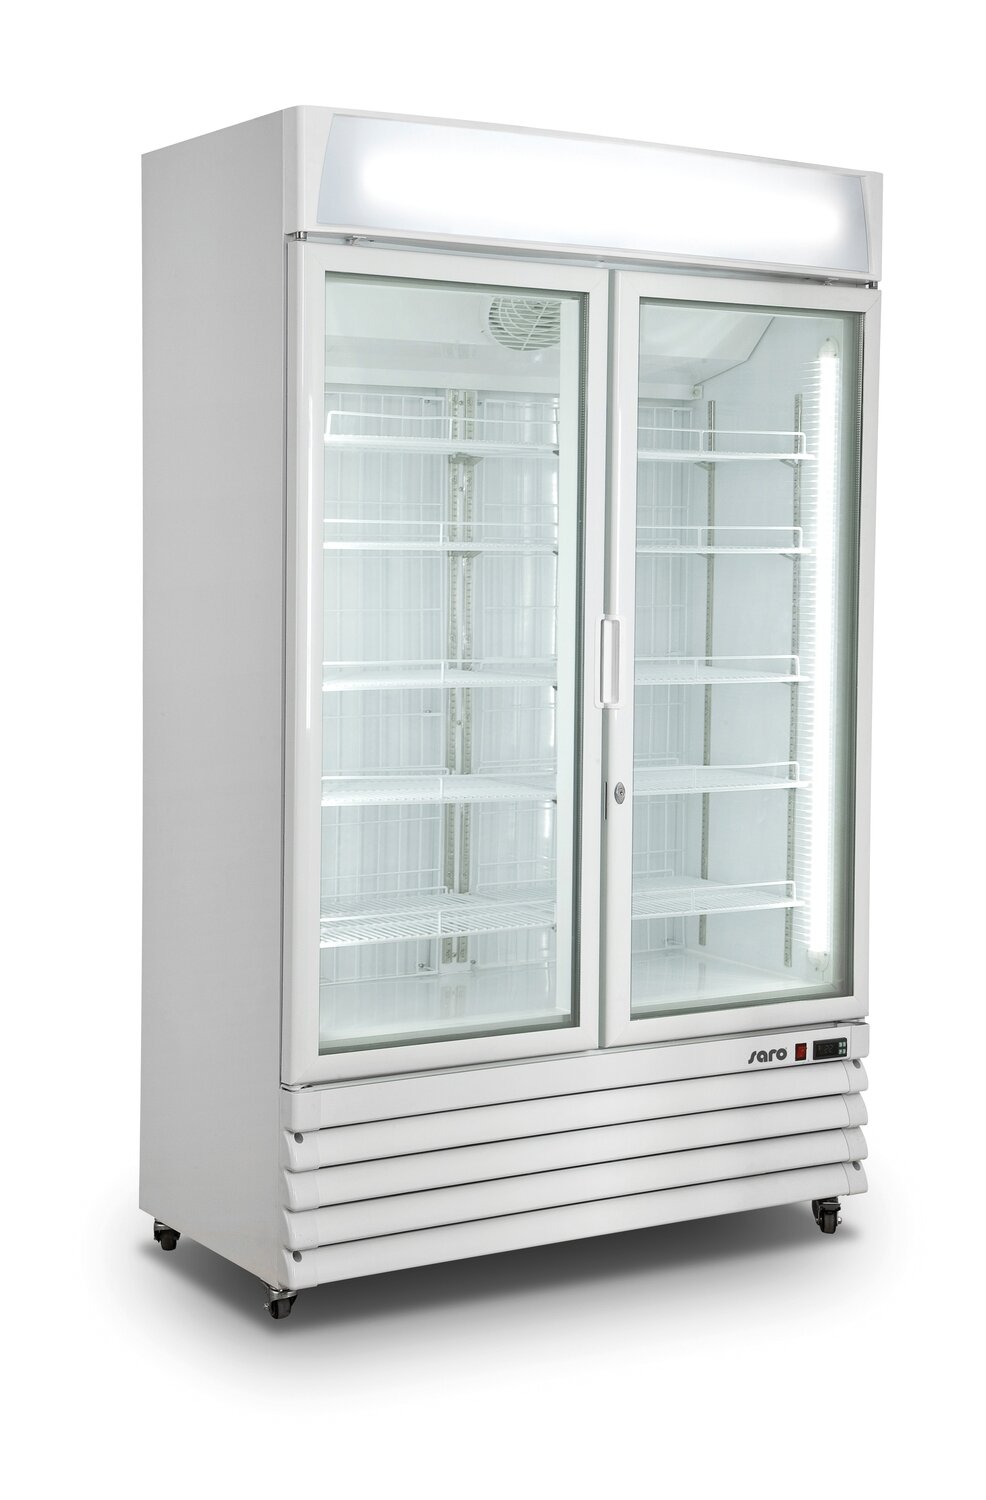 SARO Refrigerator with 2 glass doors model G 885